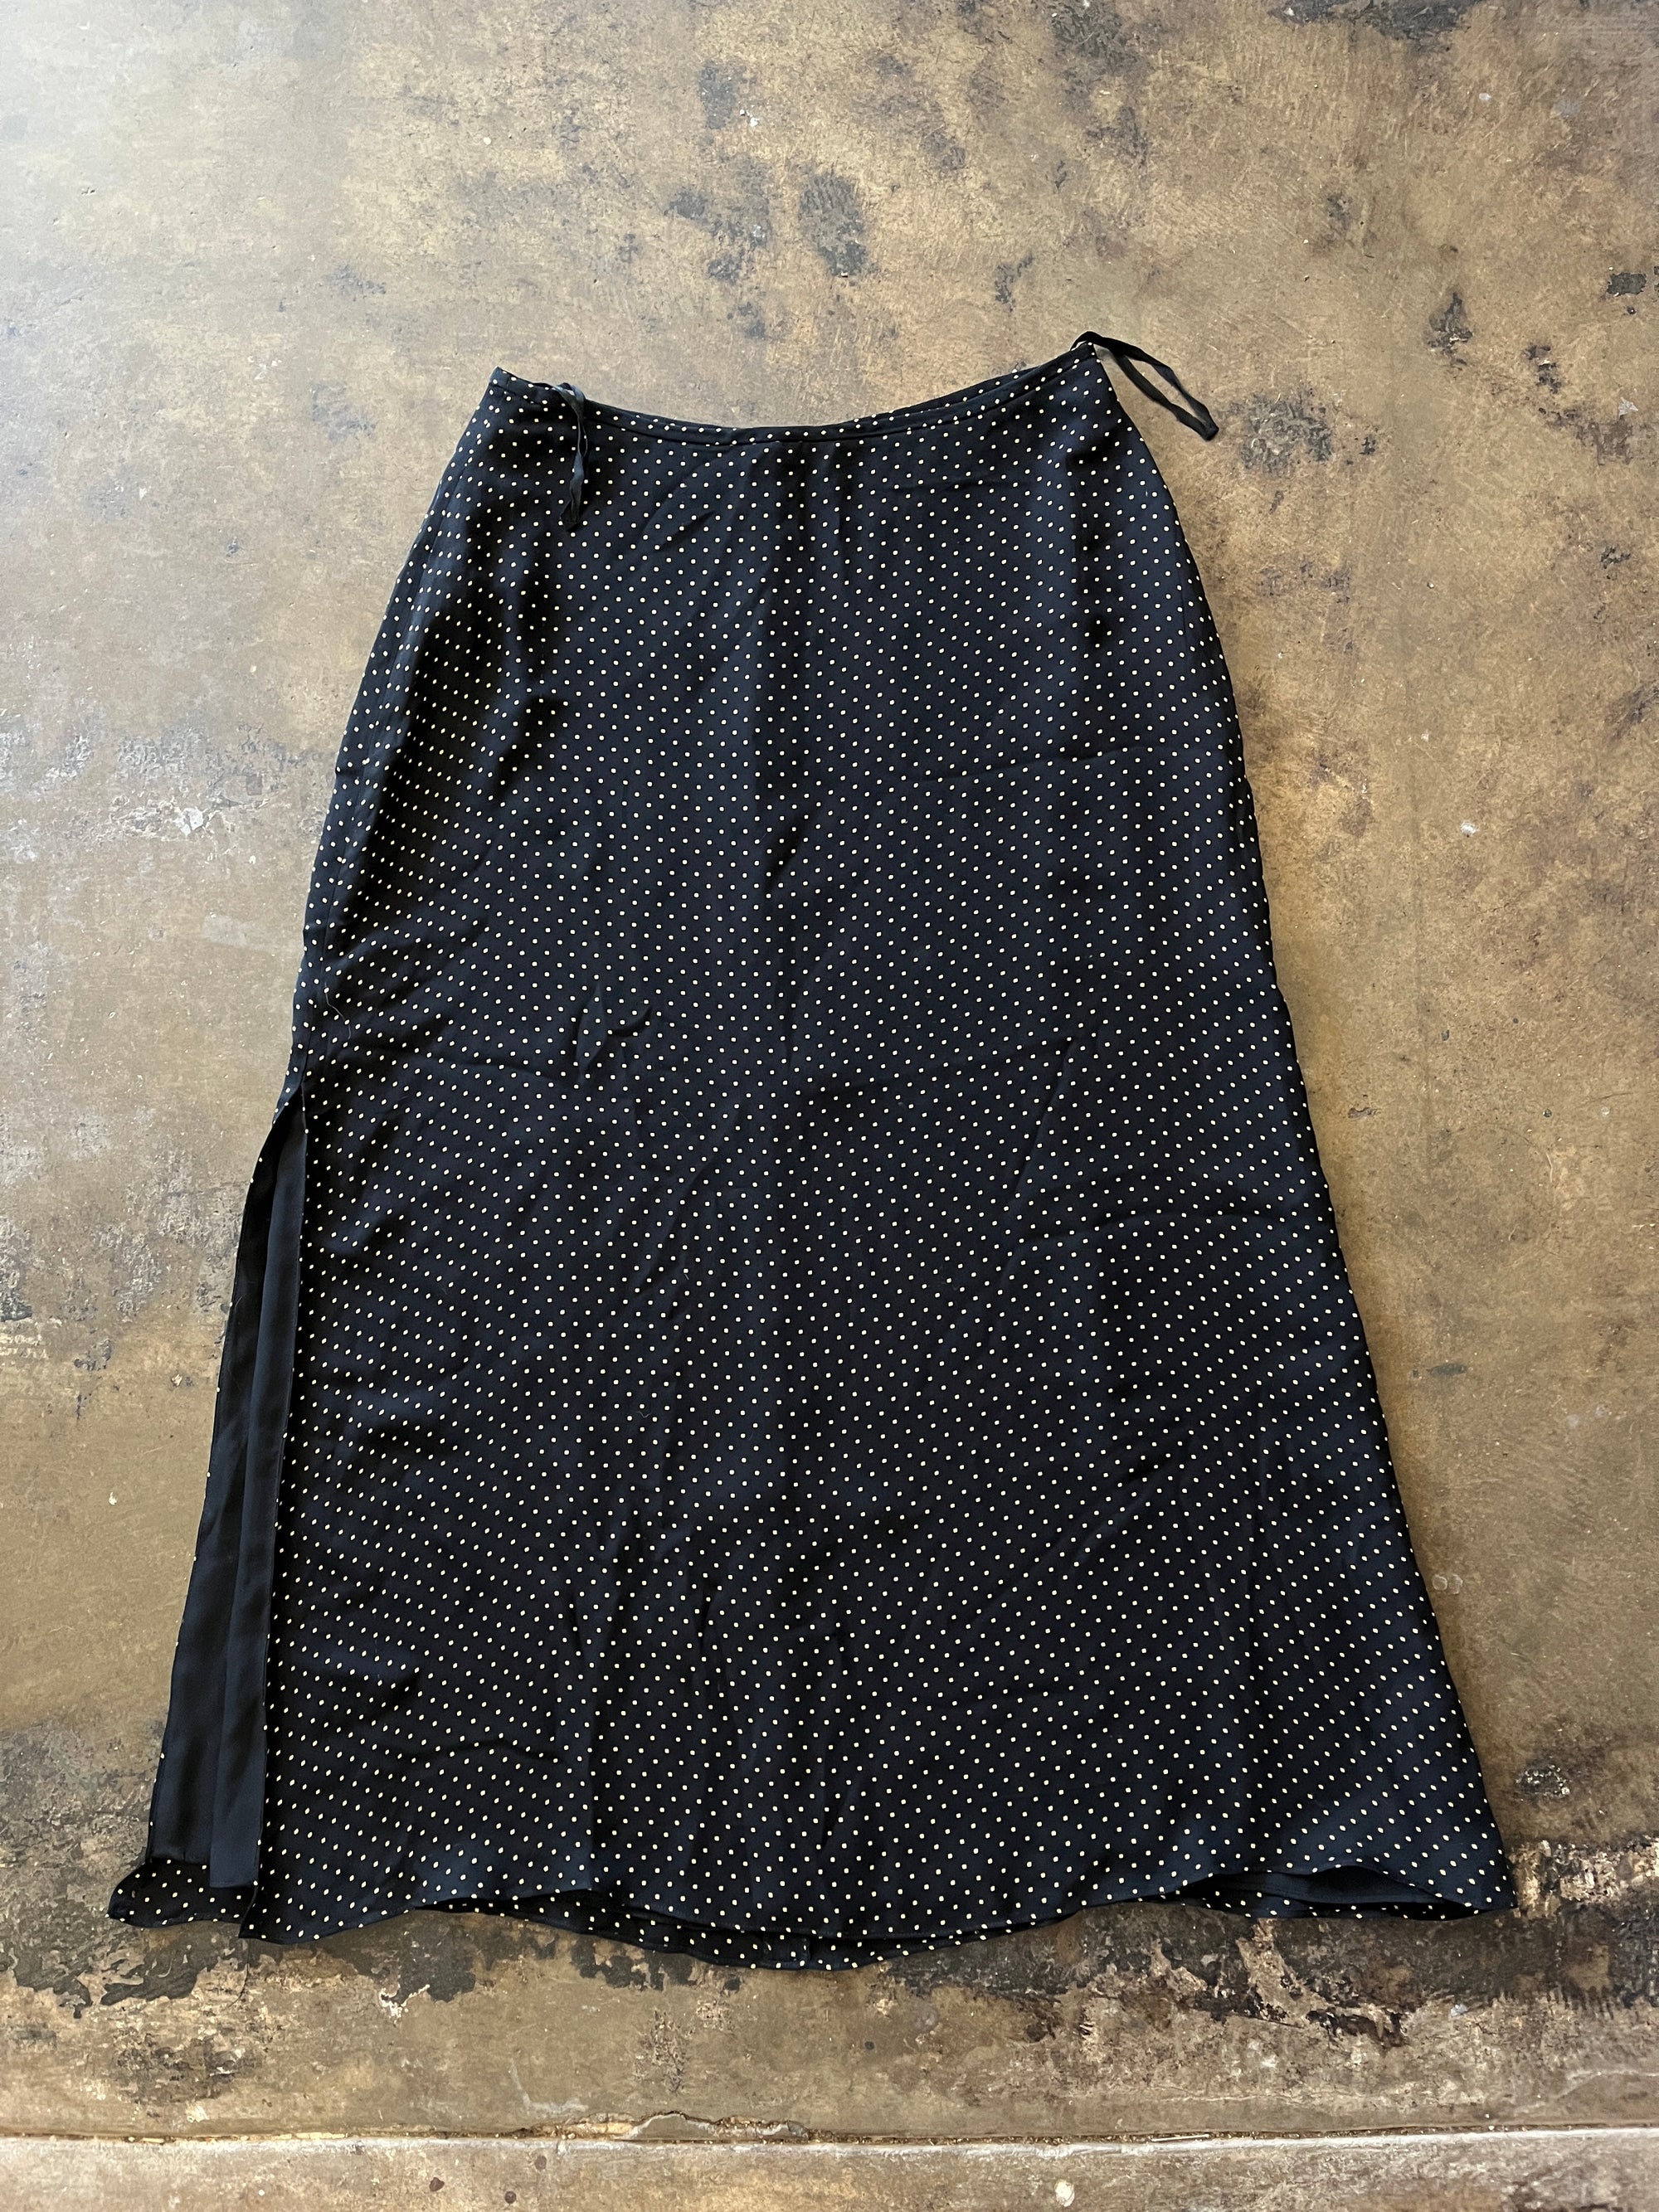 Rena Rowan Tan Dot Black Maxi Skirt